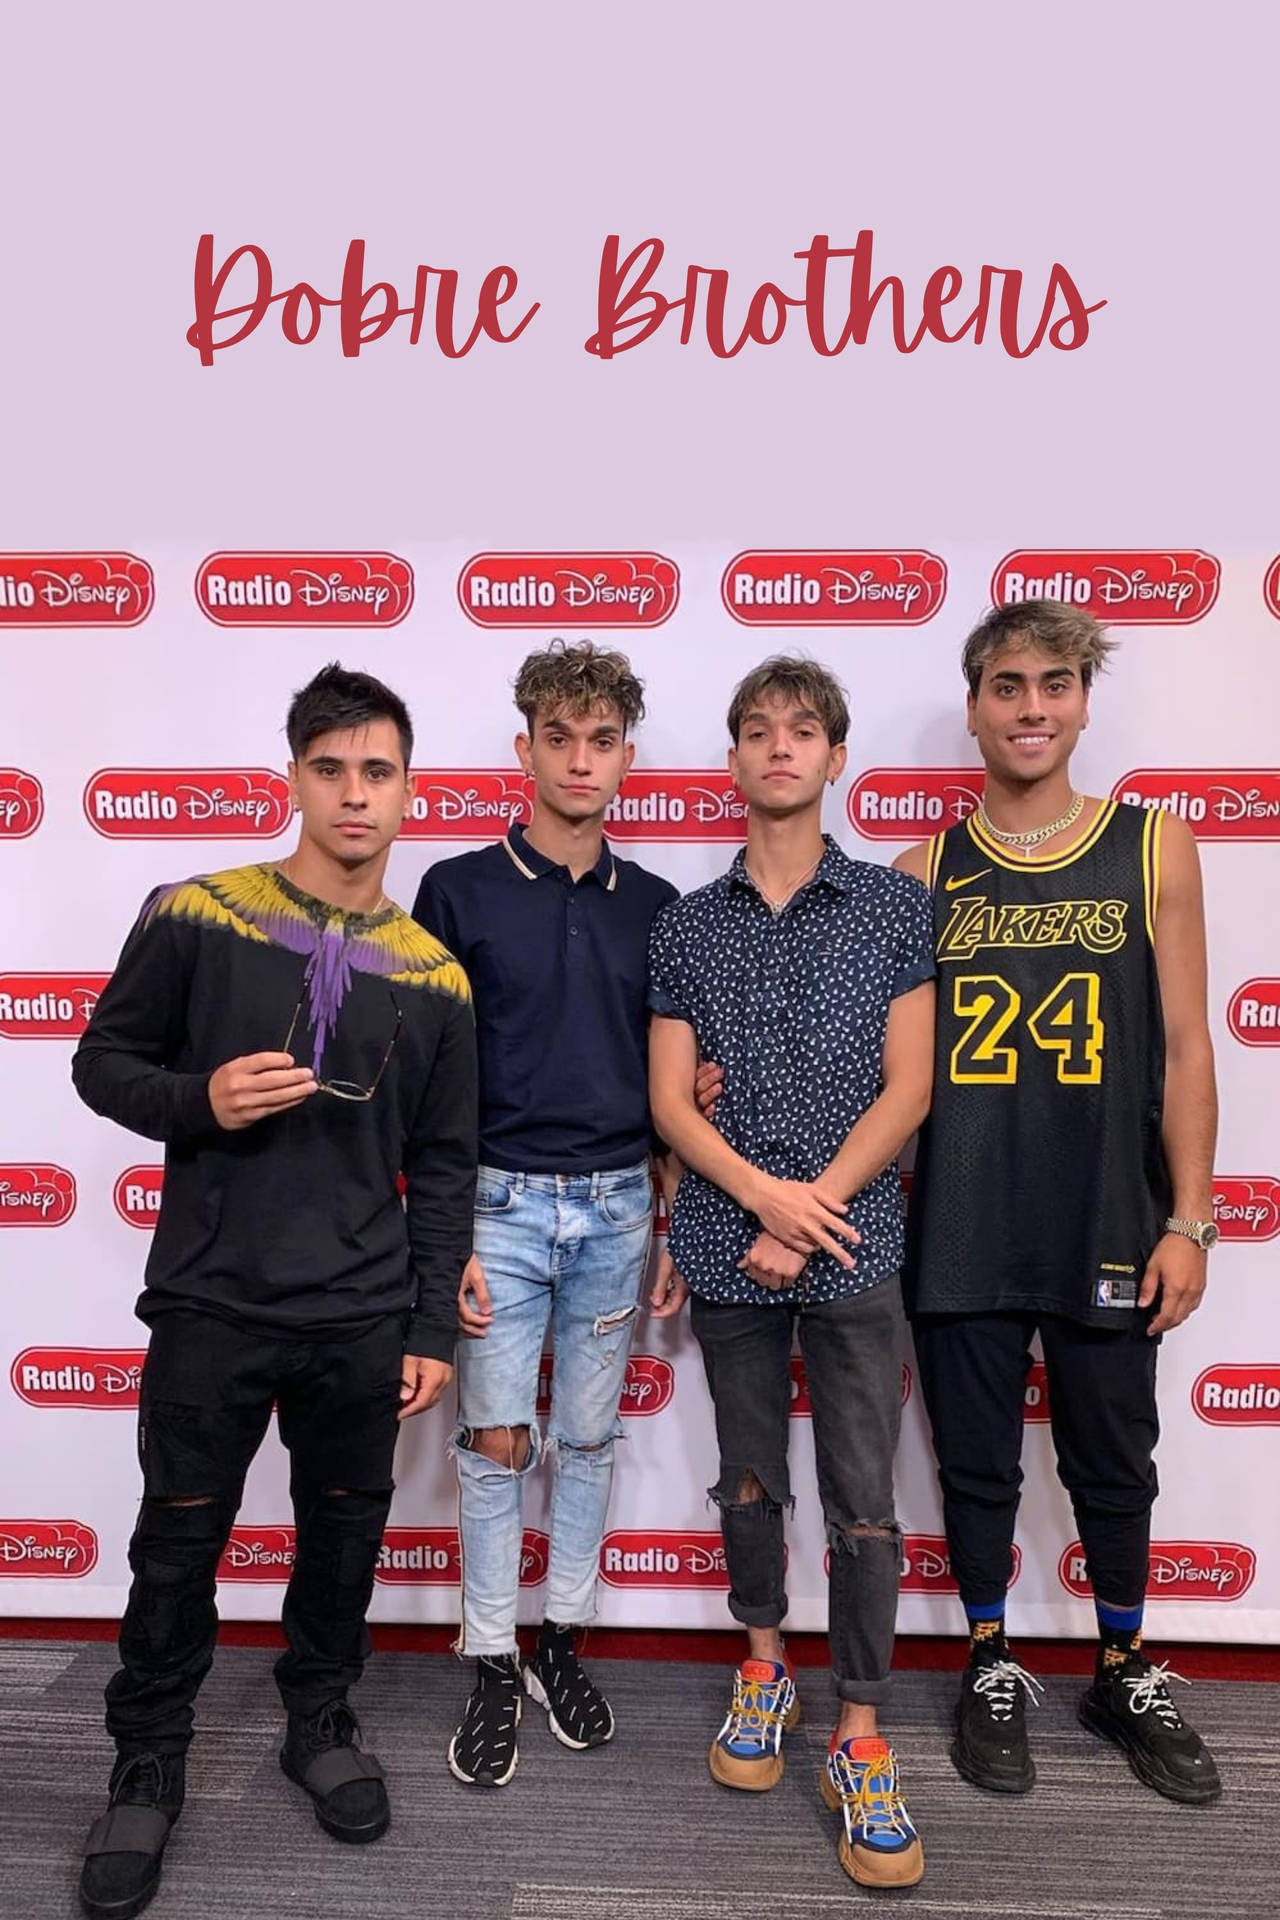 Dobre Brothers On Radio Disney 2019 Background